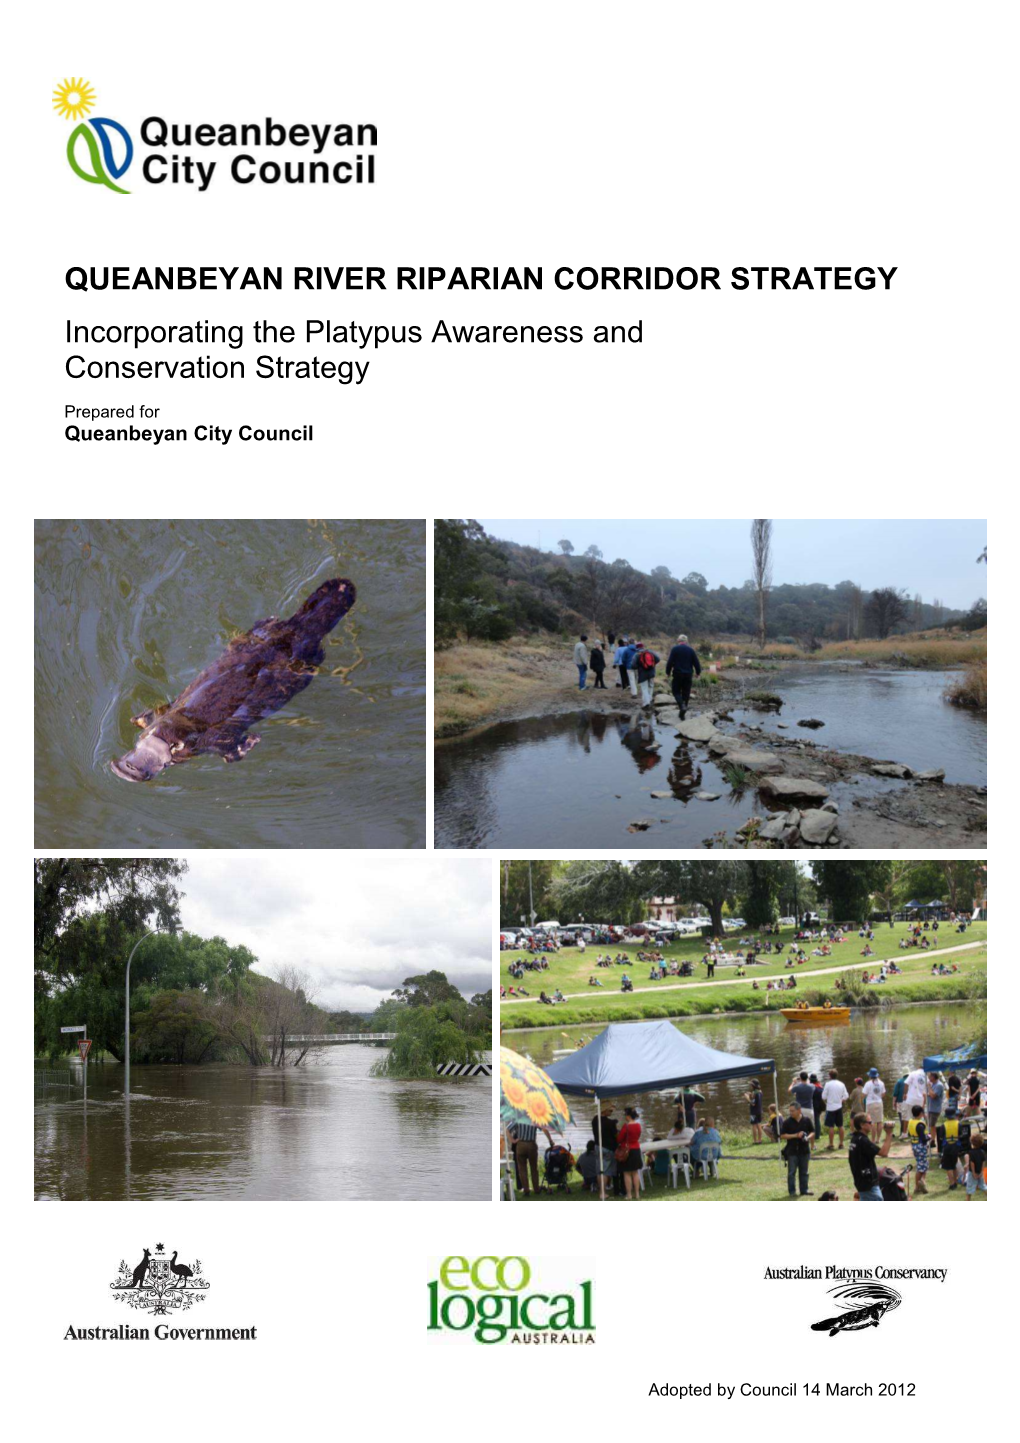 Queanbeyan River Riparian Corridor Strategy July 2012